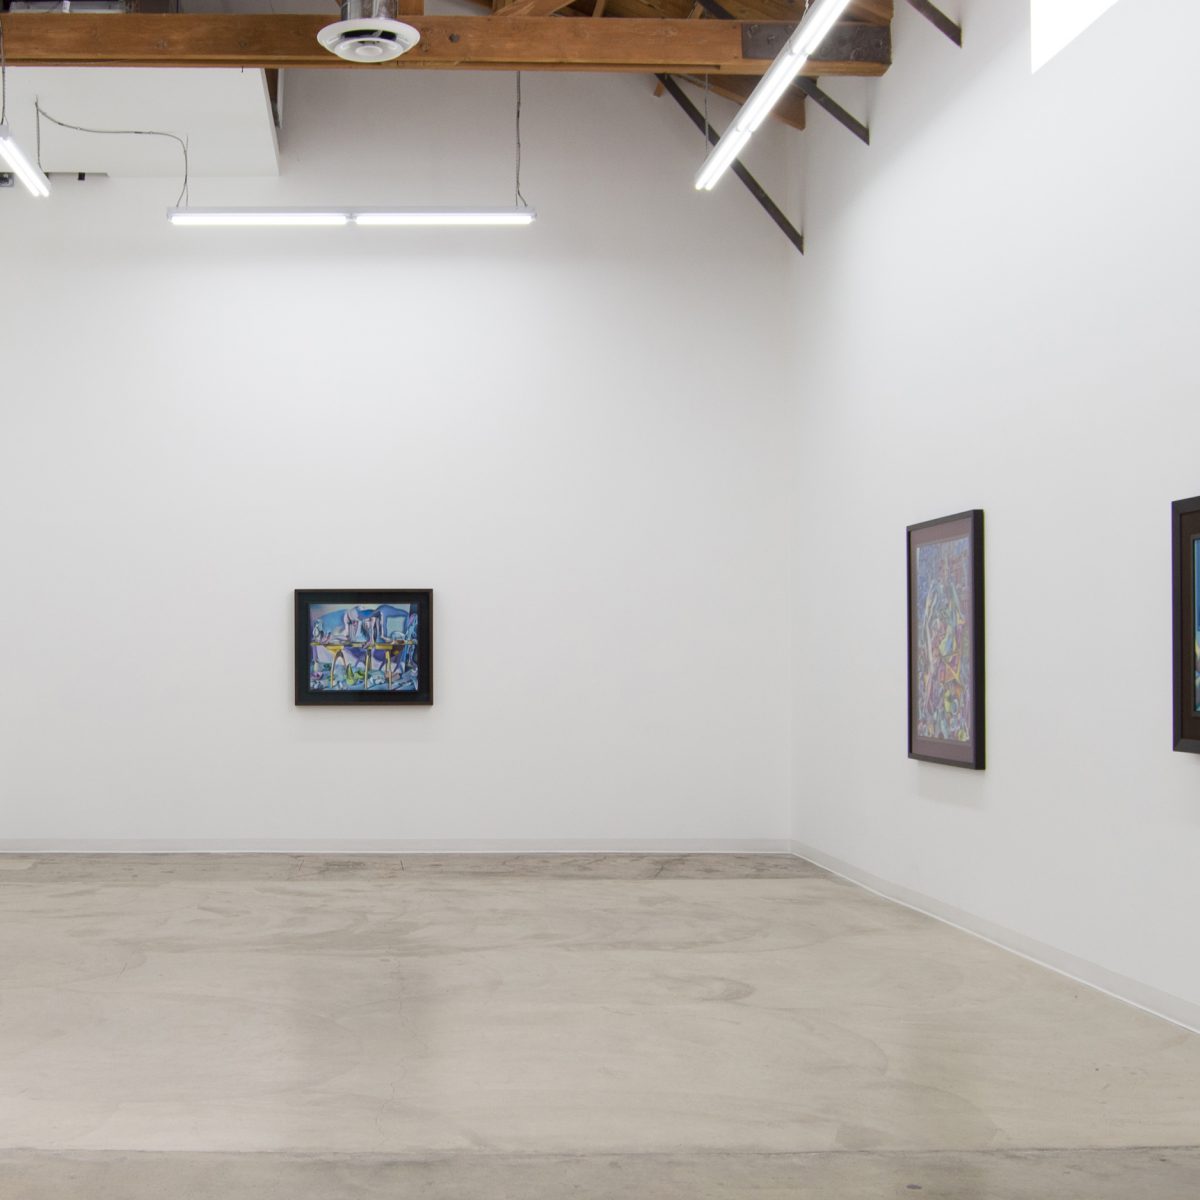 2015, Brett Reichman solo exhibition "Better Living Through Design" at CB1 Gallery in Los Angeles, CA